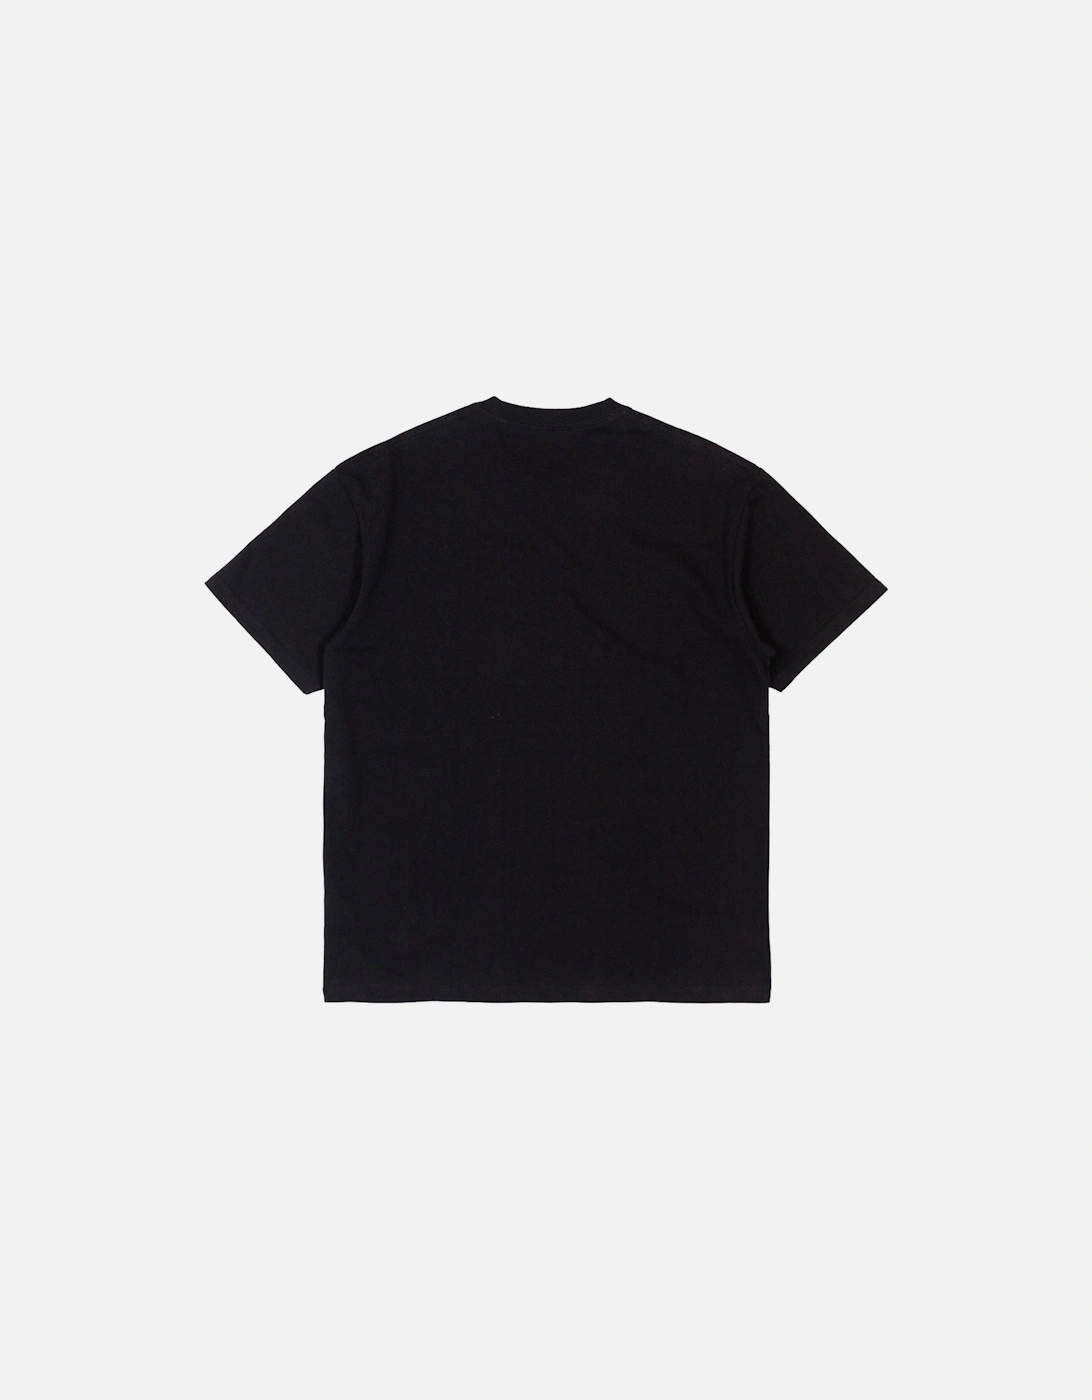 Team T-Shirt - Black